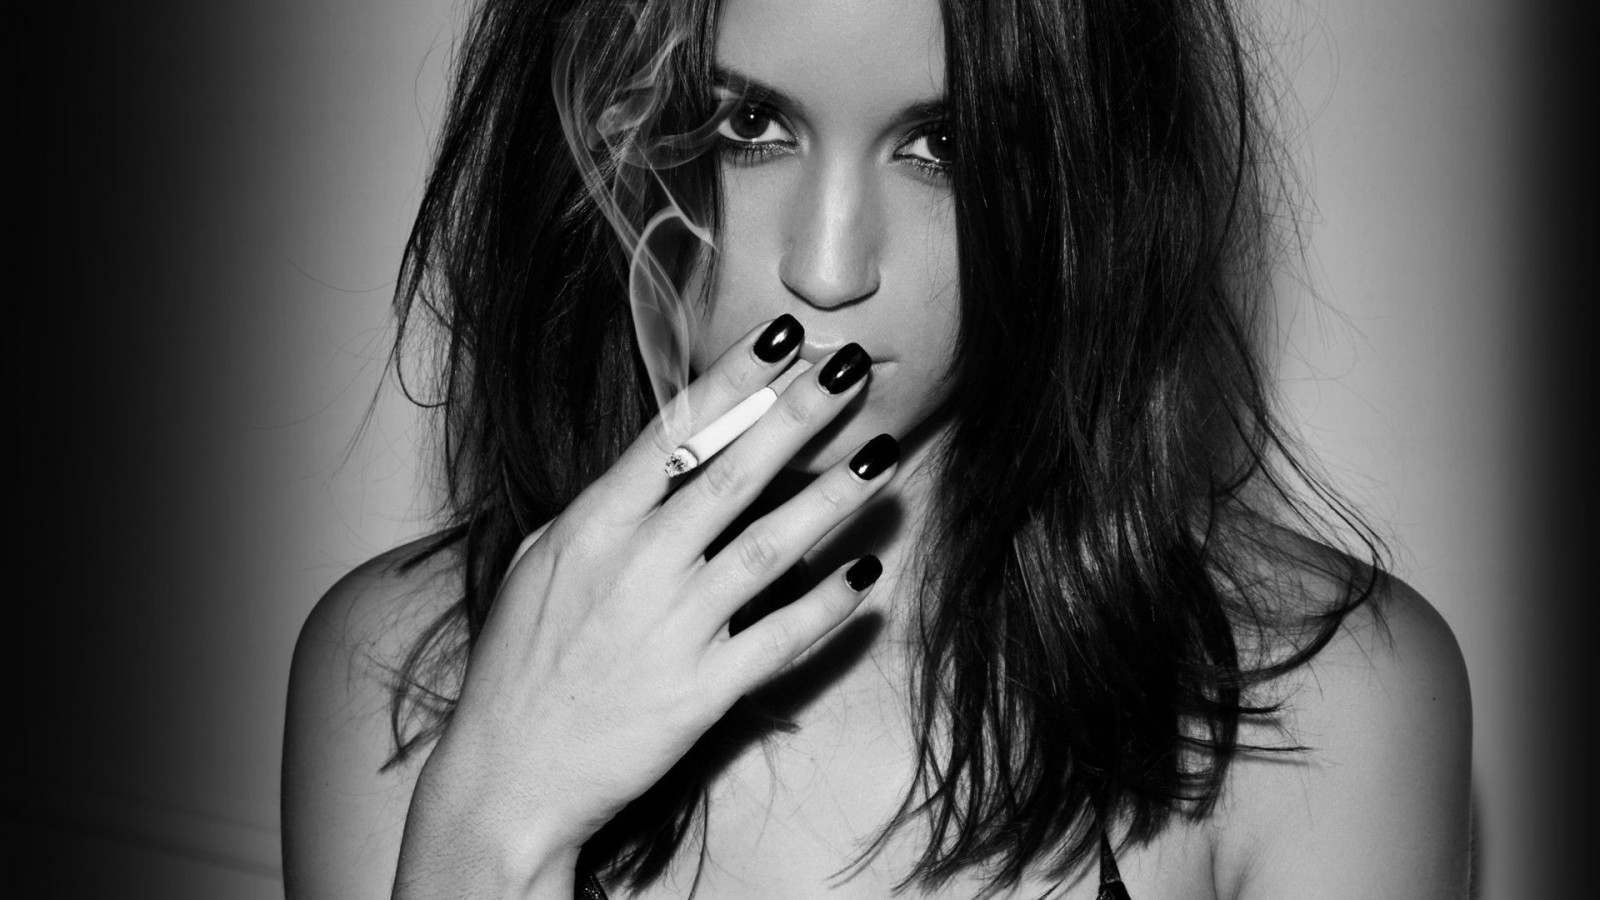 Rosie_Jones_monochrome_cigarettes_smoking_women_model_looking_at_viewer_long_hair-257917.jpg!d